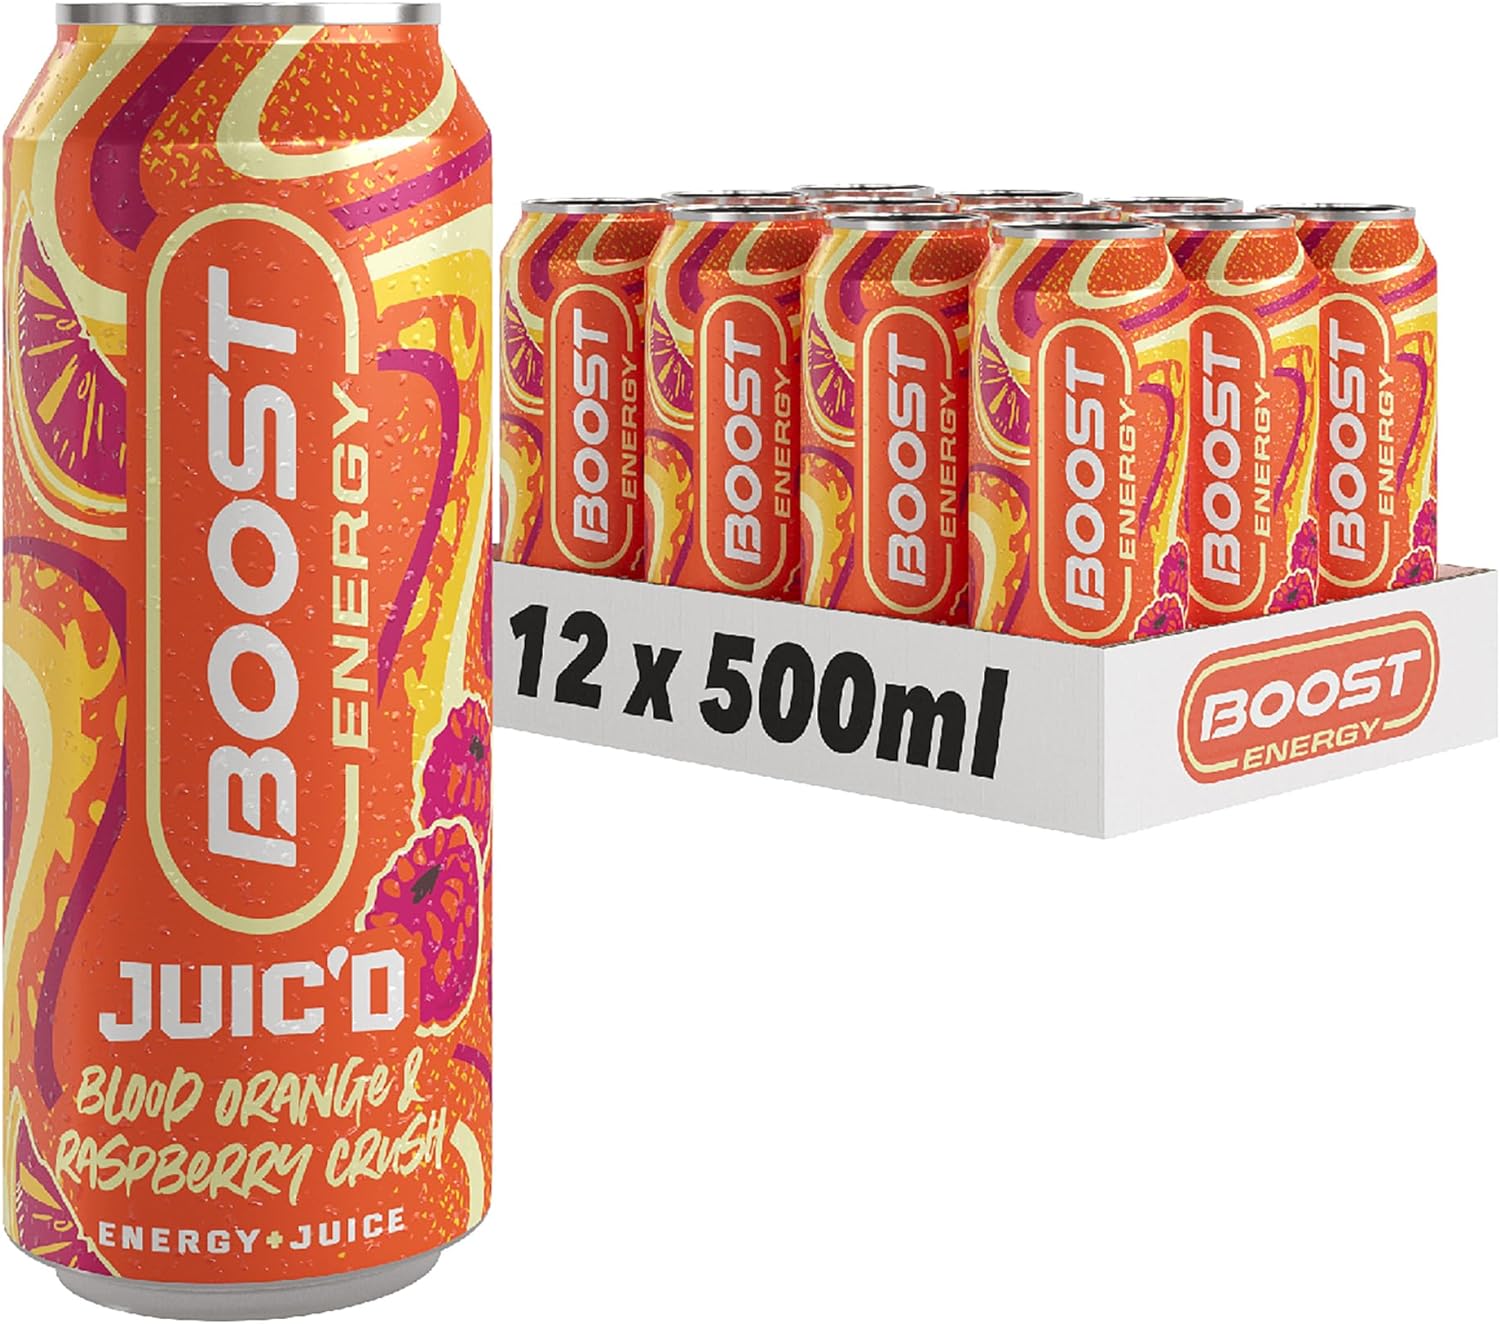 Boost Energy Juic'd Blood Orange & Raspberry - 500ml Case of 12